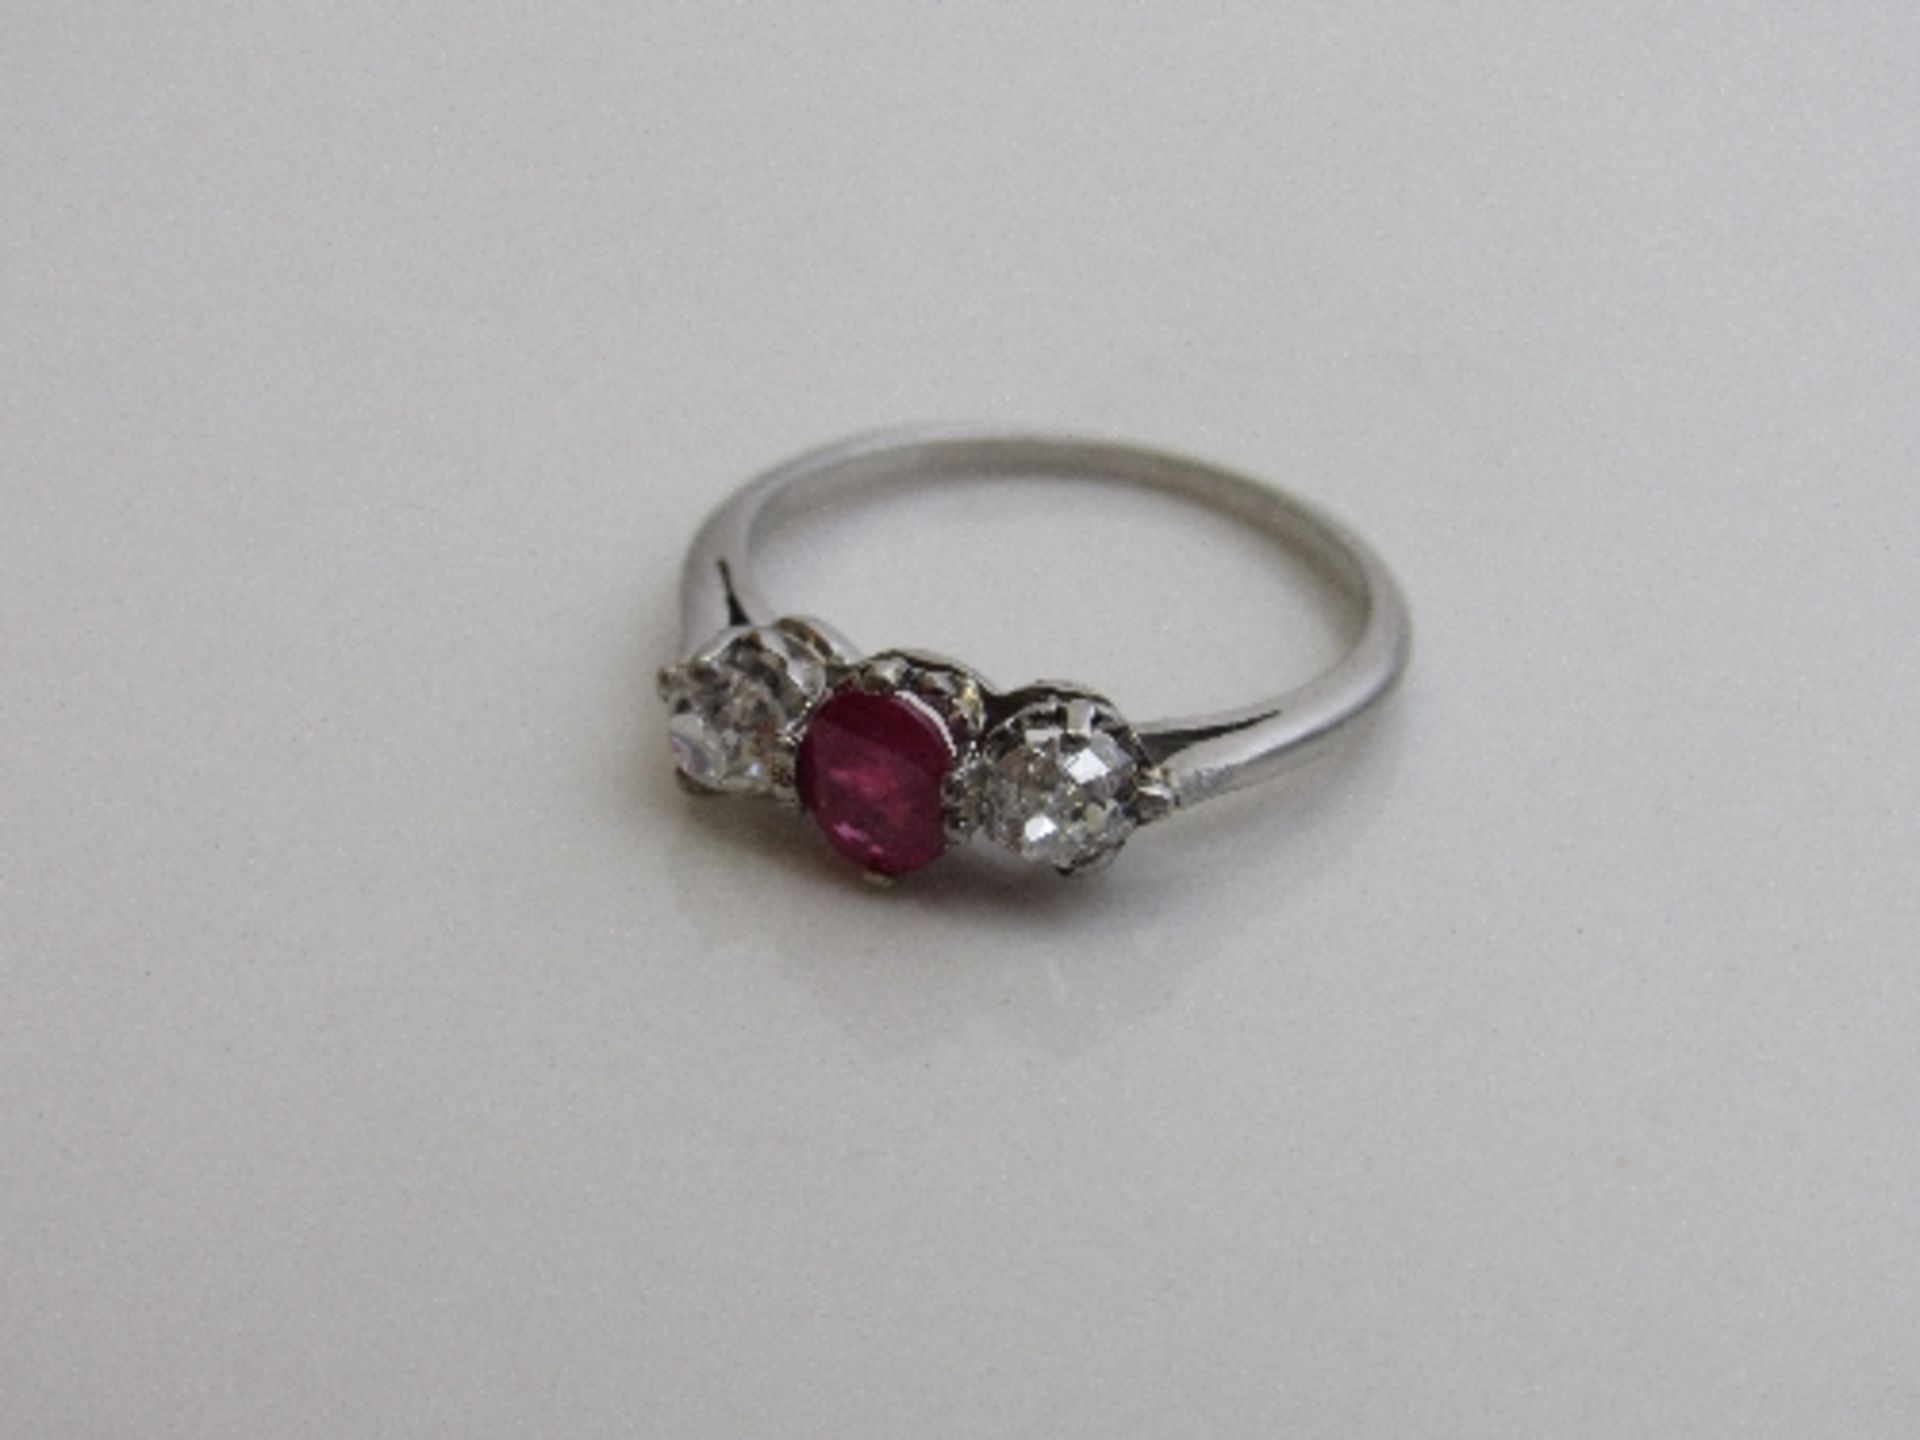 Platinum, diamond & ruby ring, size J 1/2, weight 2.3gms. Estimate £450-480 - Image 4 of 4